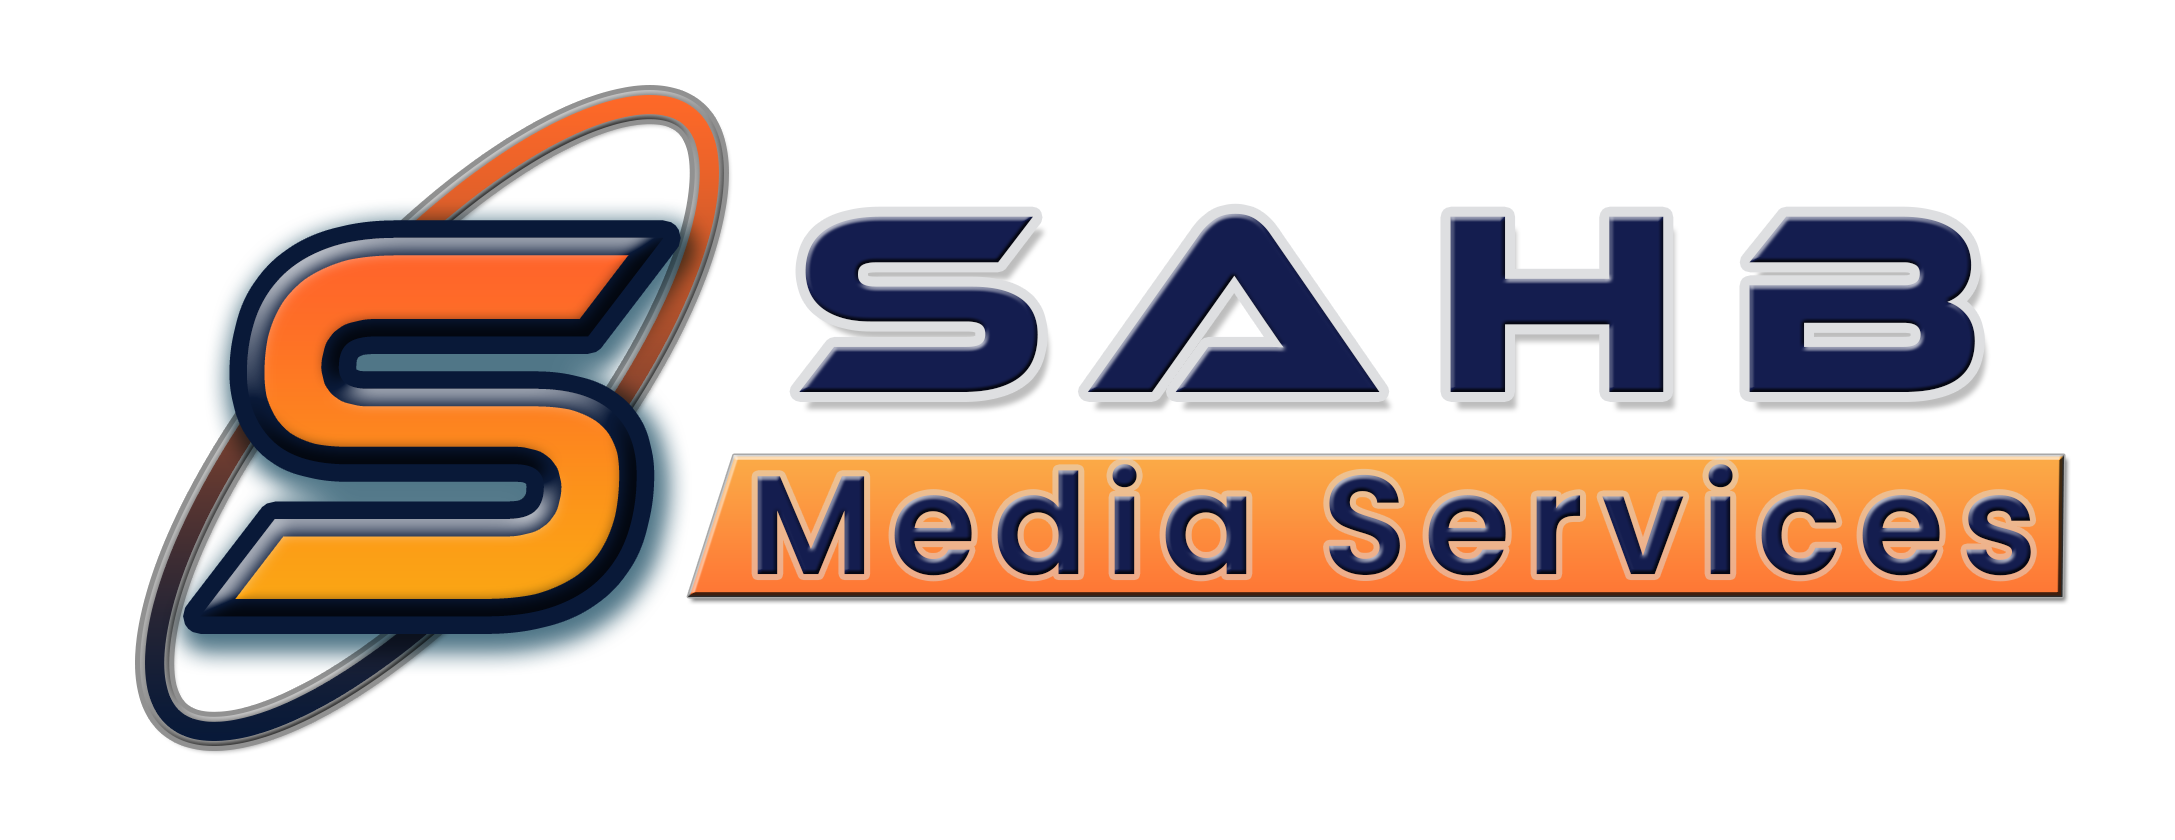 Sahb Media Services